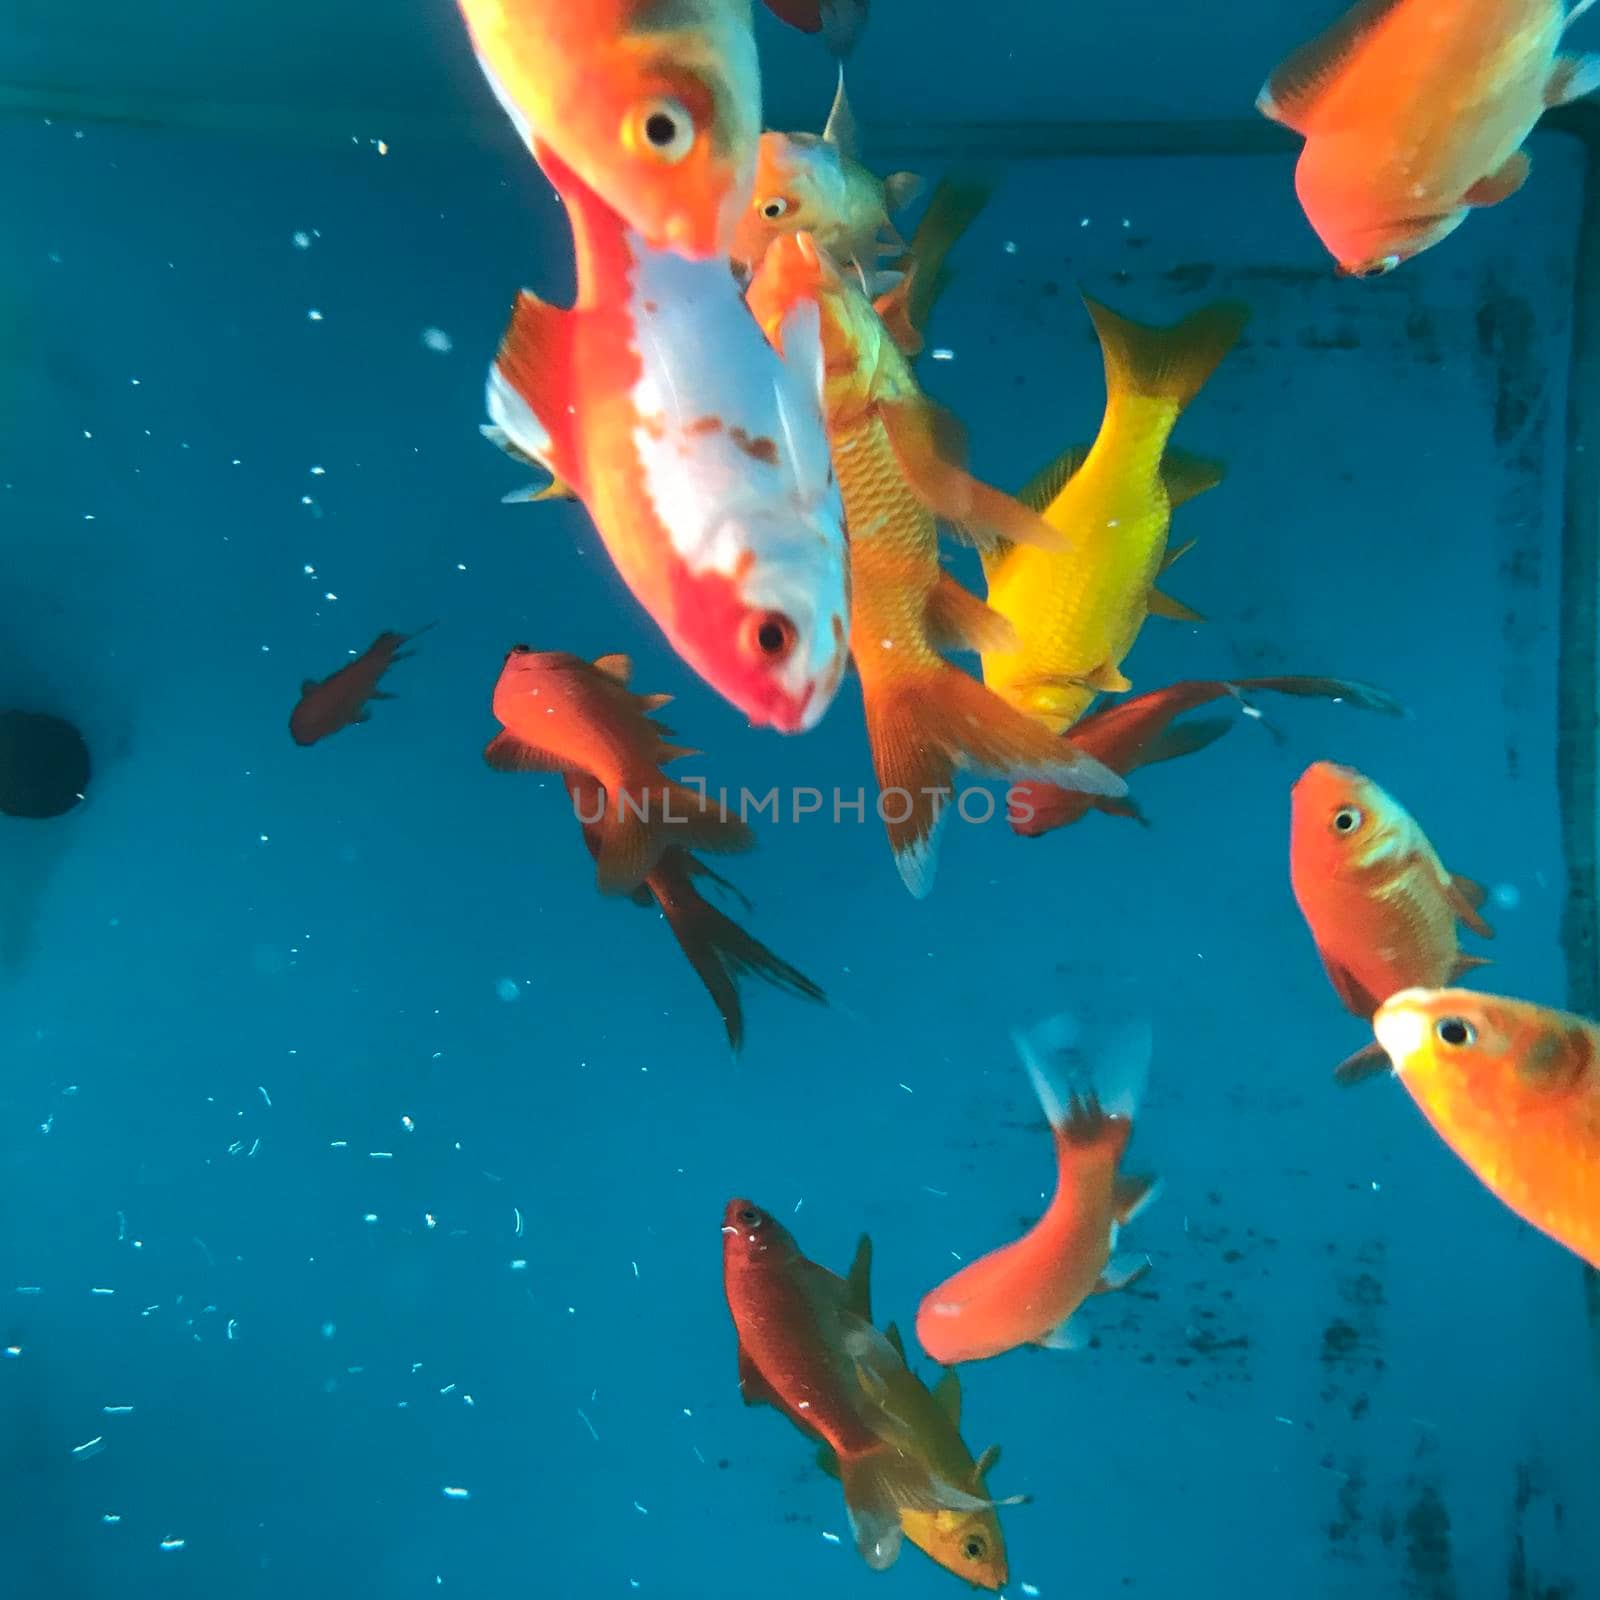 Some Orange Goldfish in a blue fishtank in a petshop